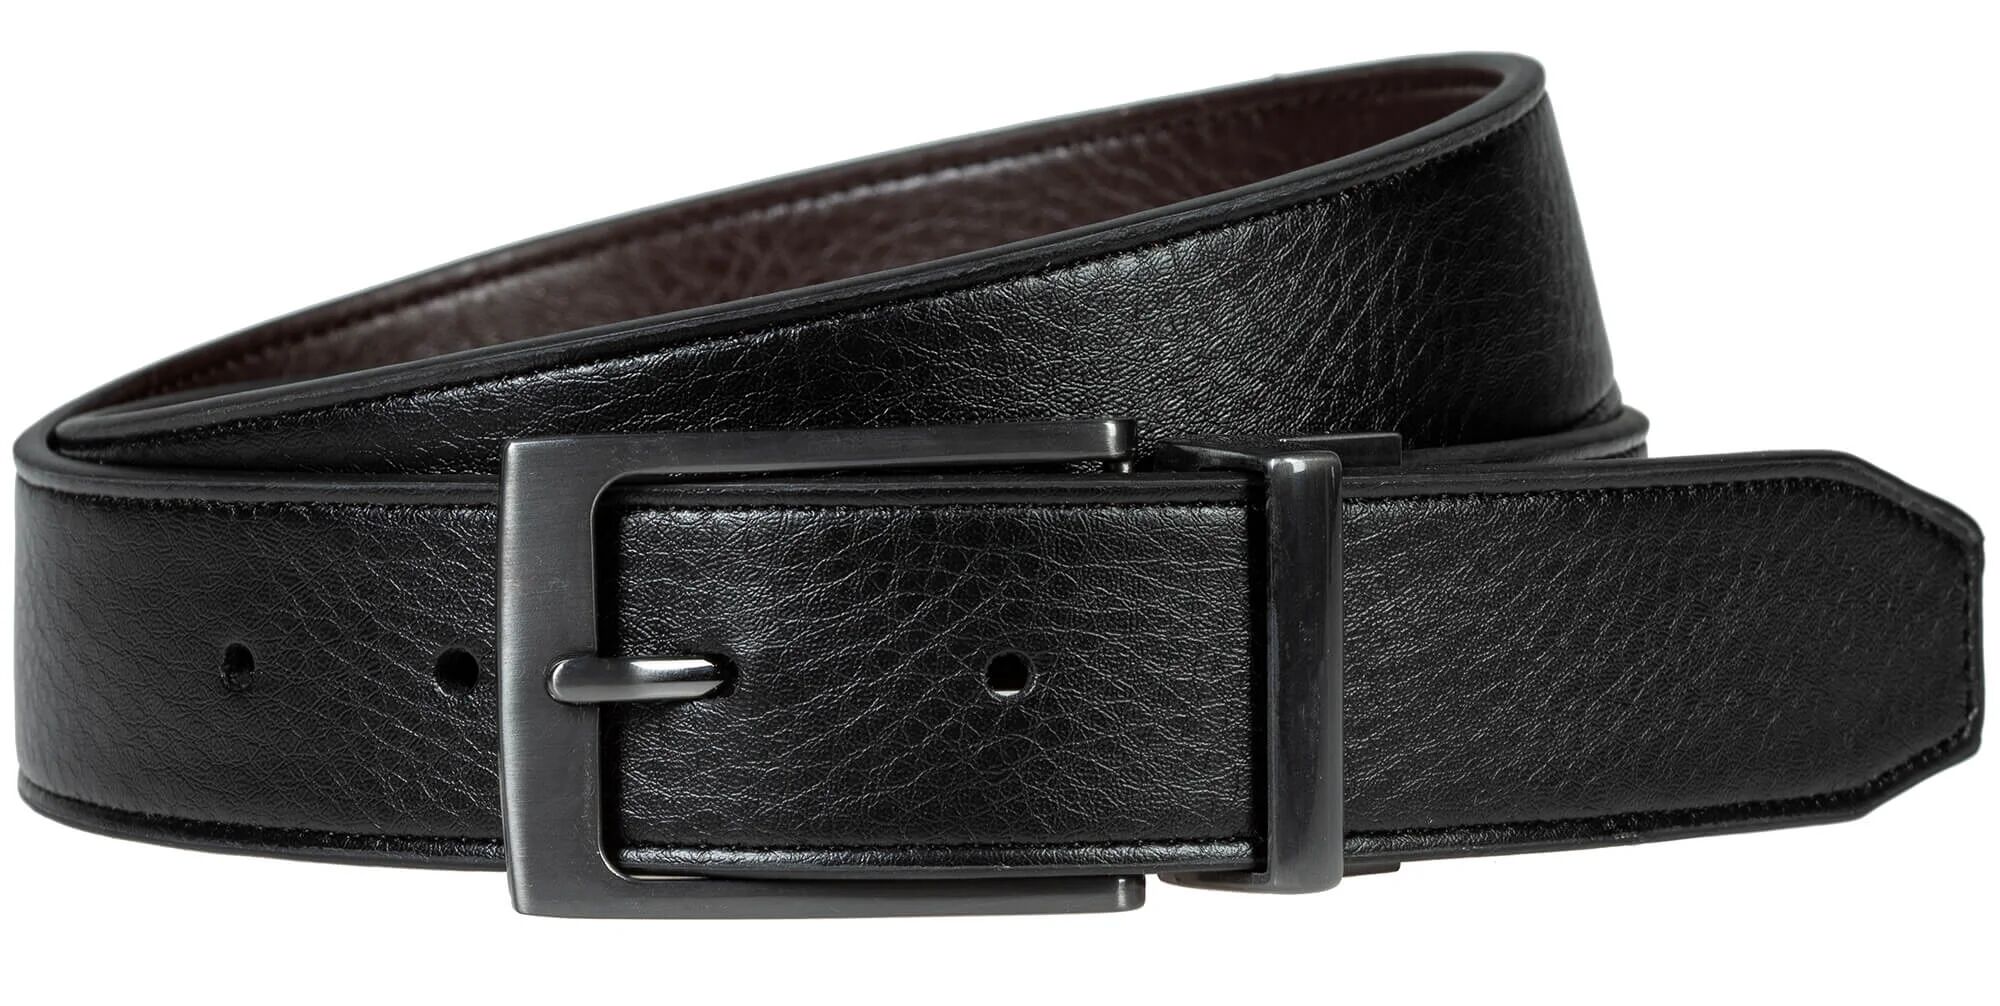 Nike Men's Golf Edge Stitch Reversible Leather Belt - Black, Size: 34